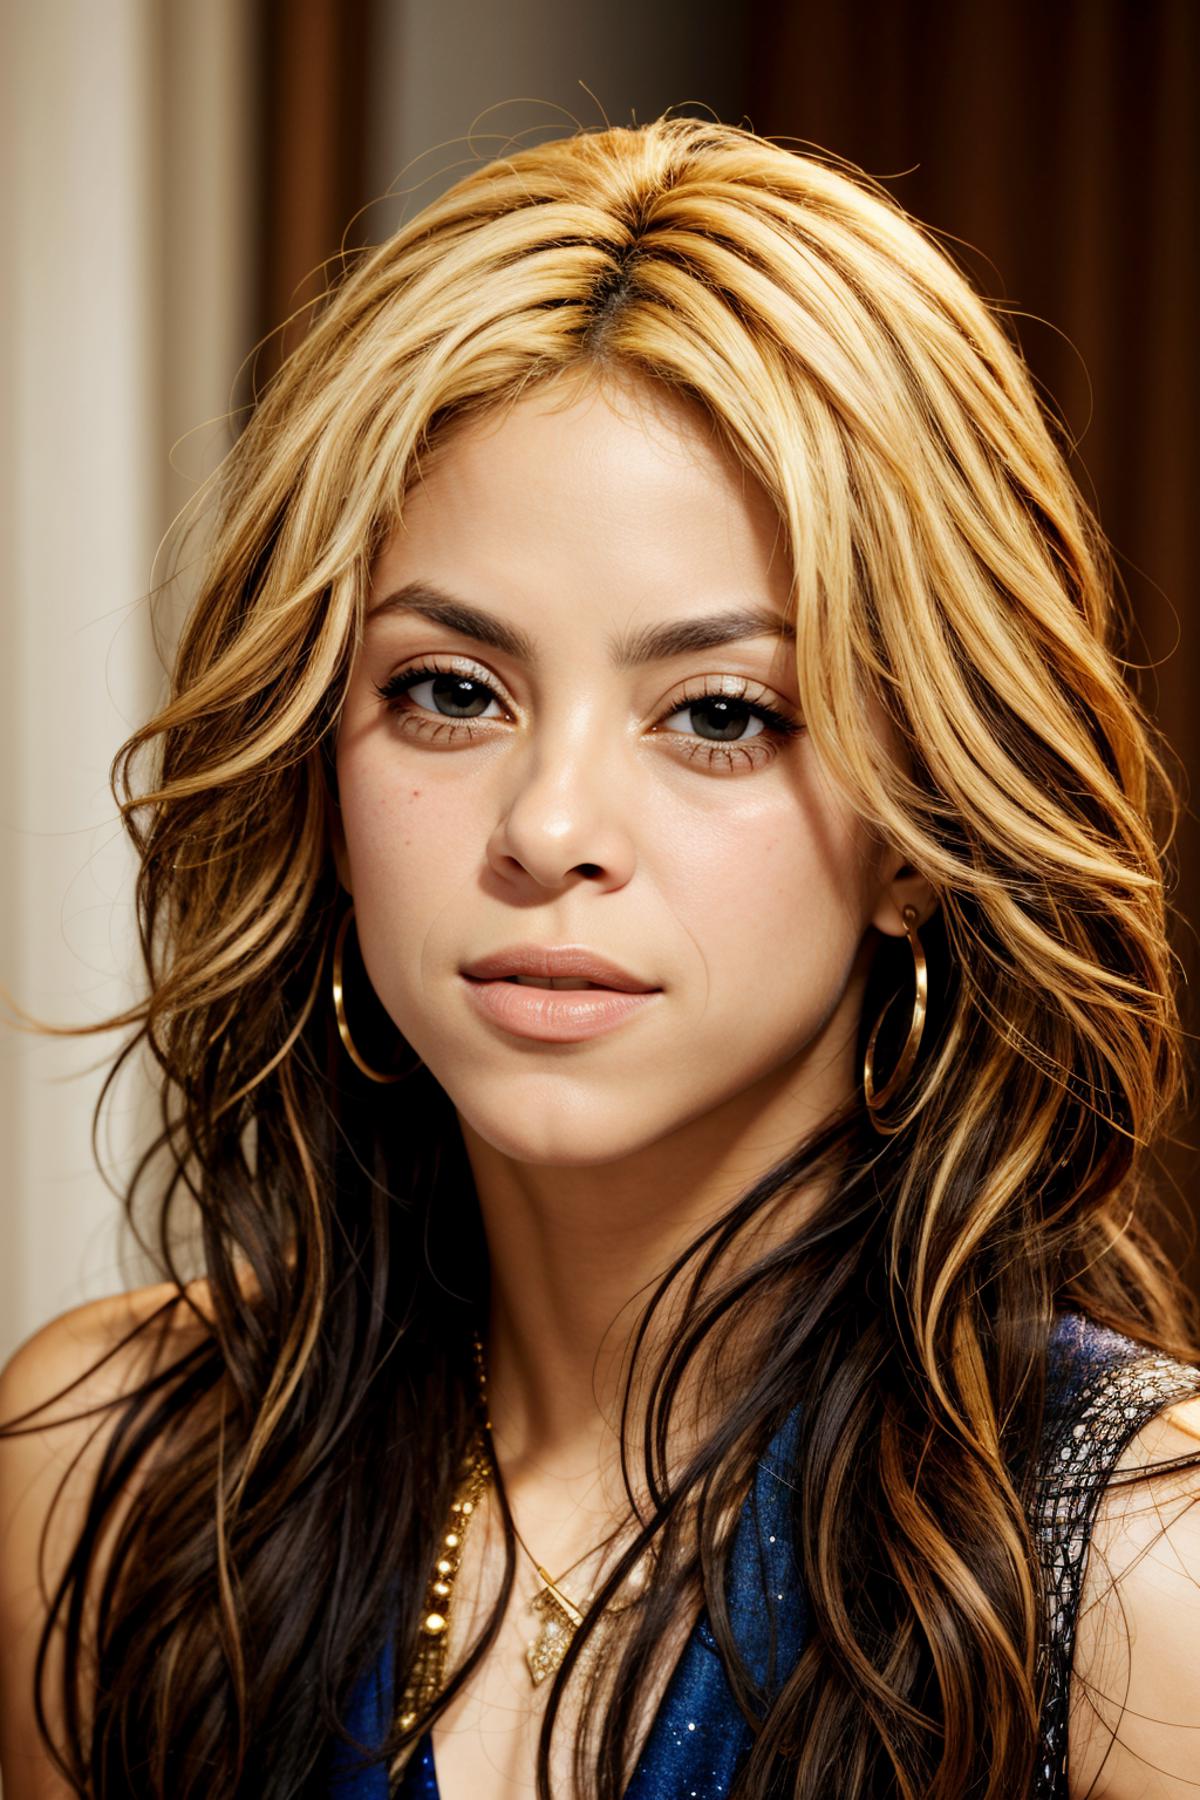 Shakira image by Ggrue